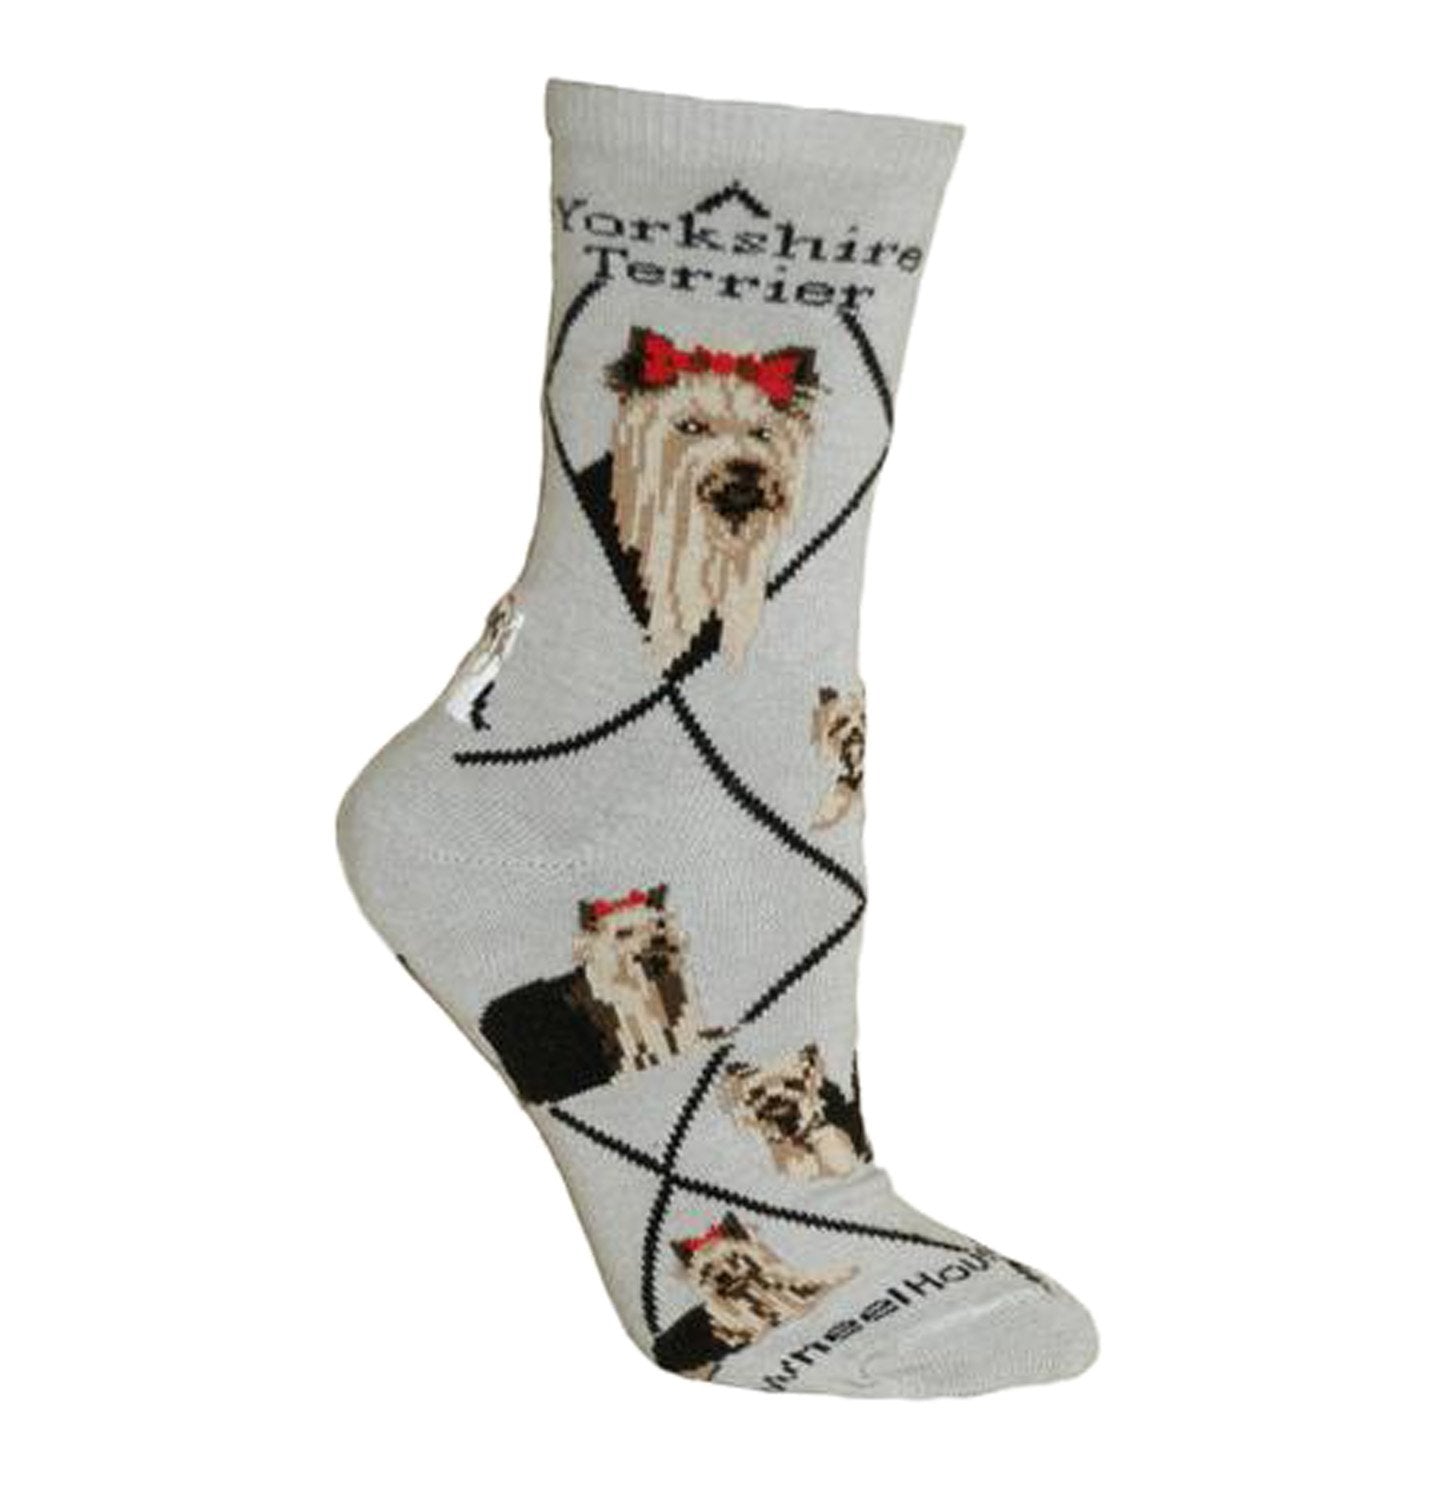 Animal Pride - Yorkshire Terrier on Grey - Adult Cotton Crew Socks